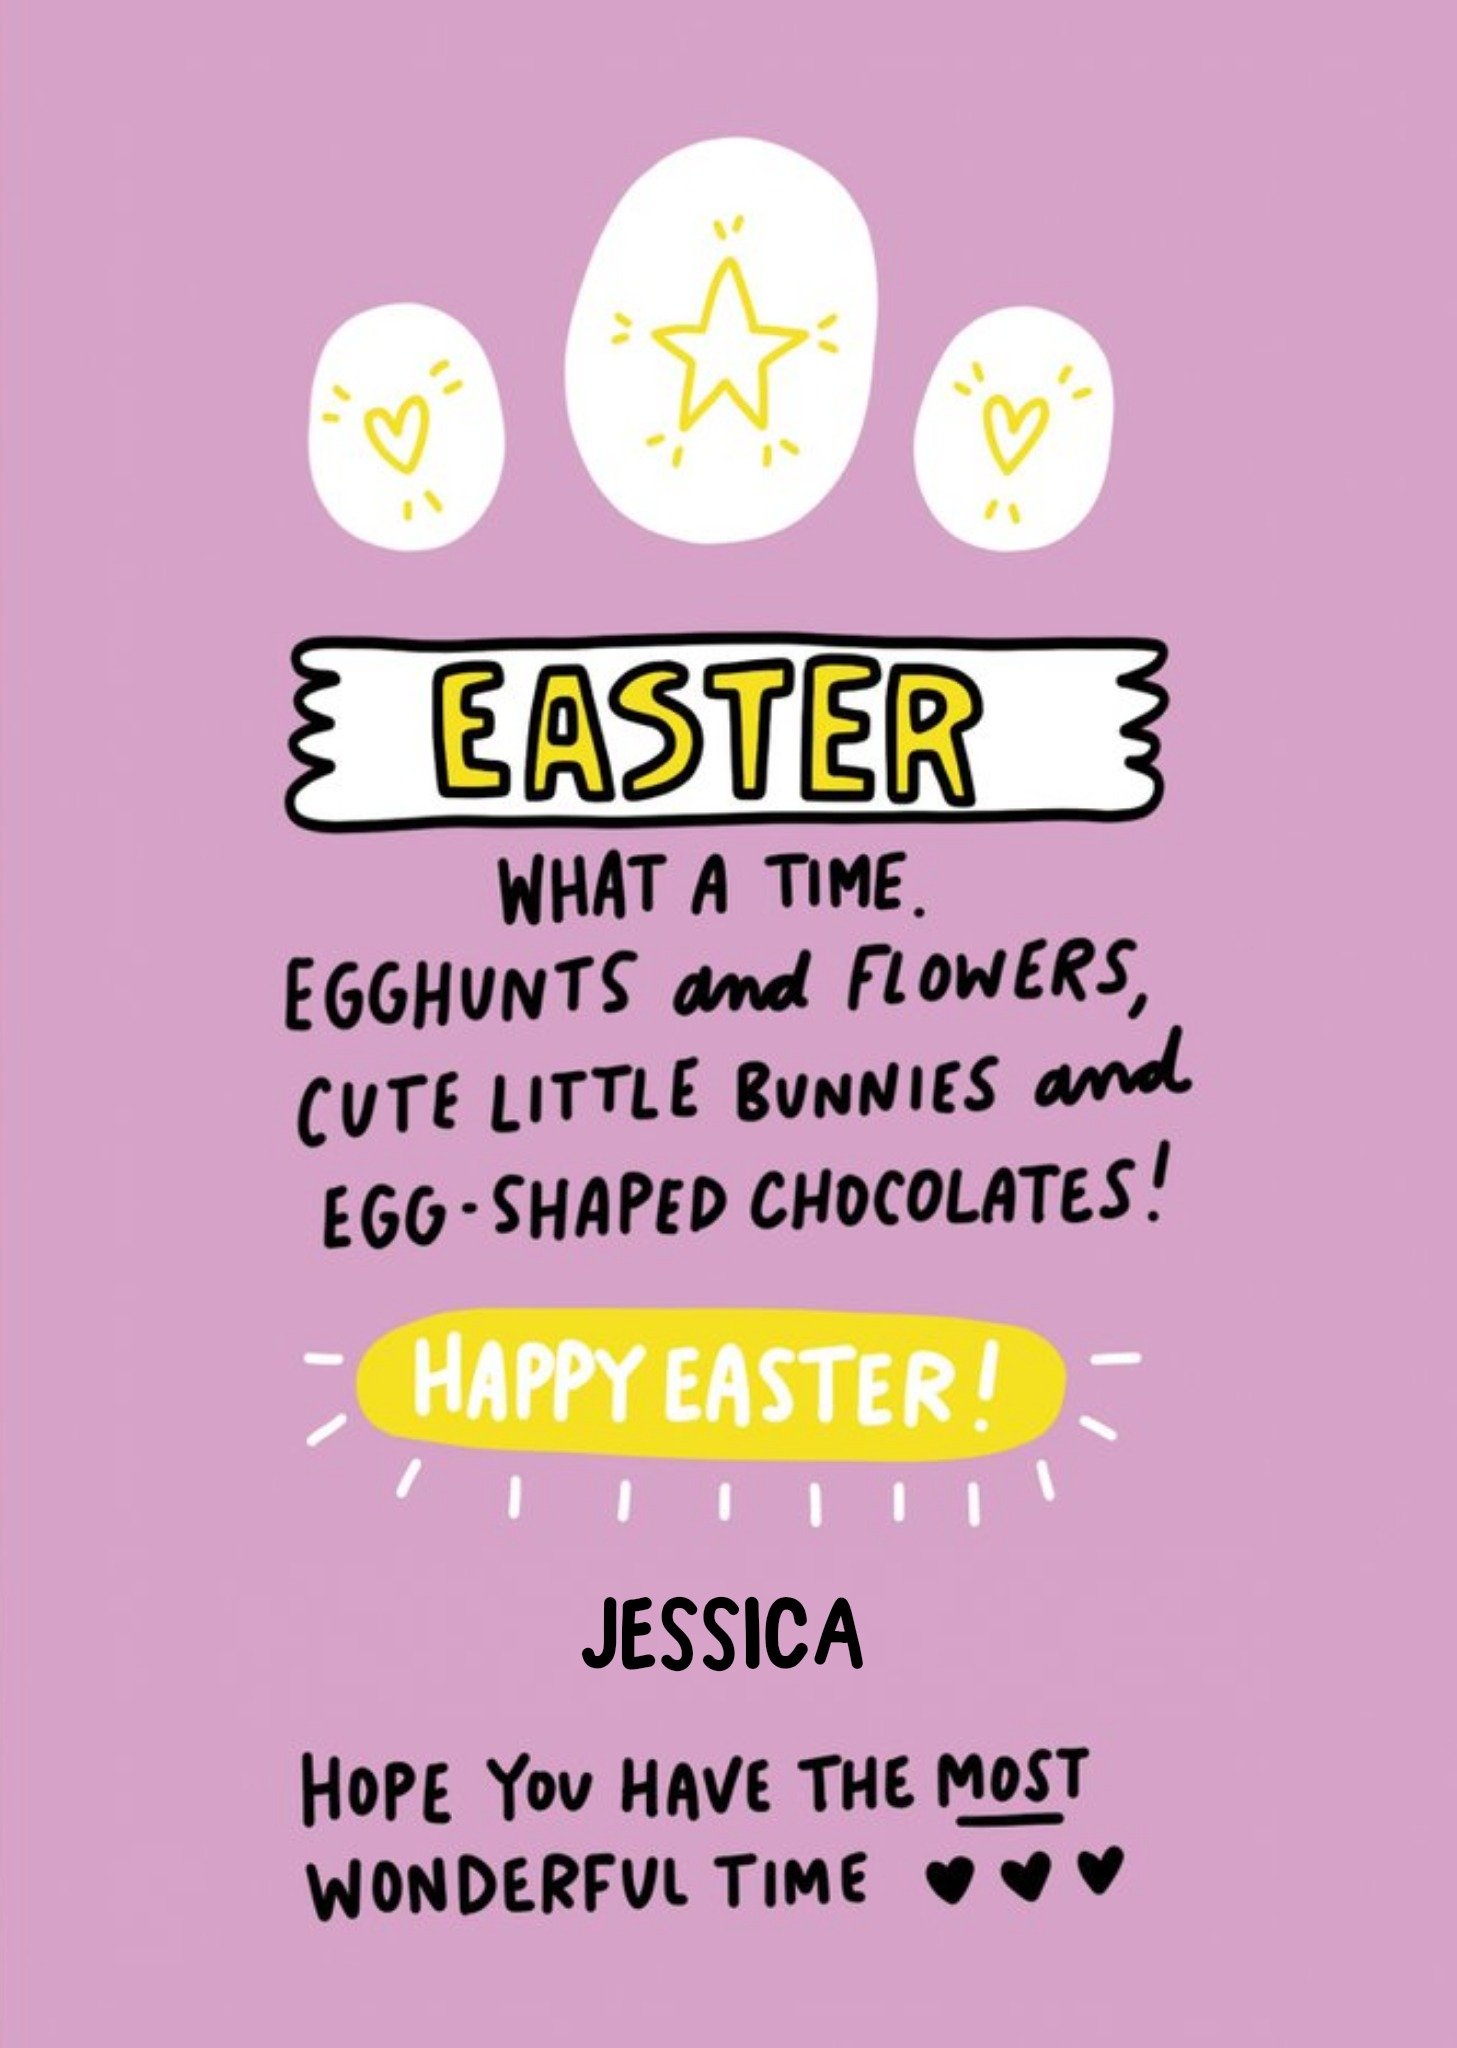 Moonpig Angela Chick Egghunts Bunnies Flowers Chocolates Happy Easter Card Ecard